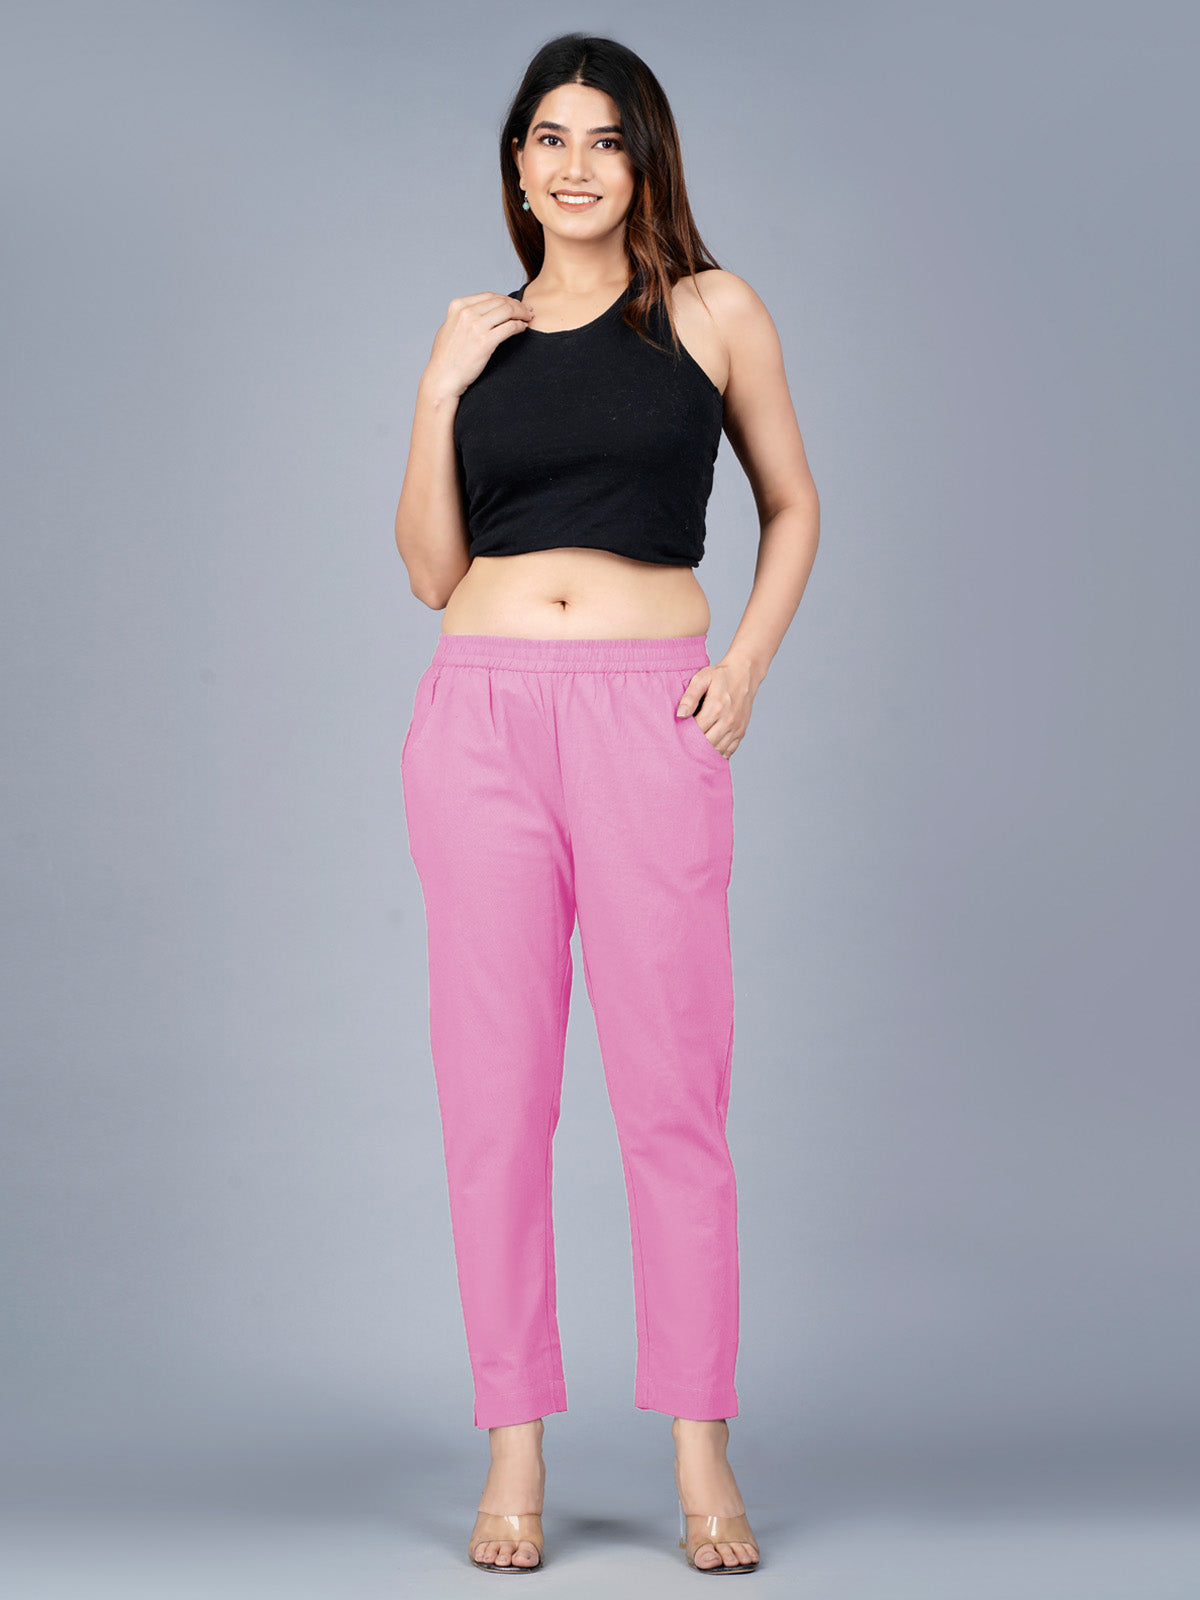 Women's Pink Regular Fit Elastic Cotton Trouser